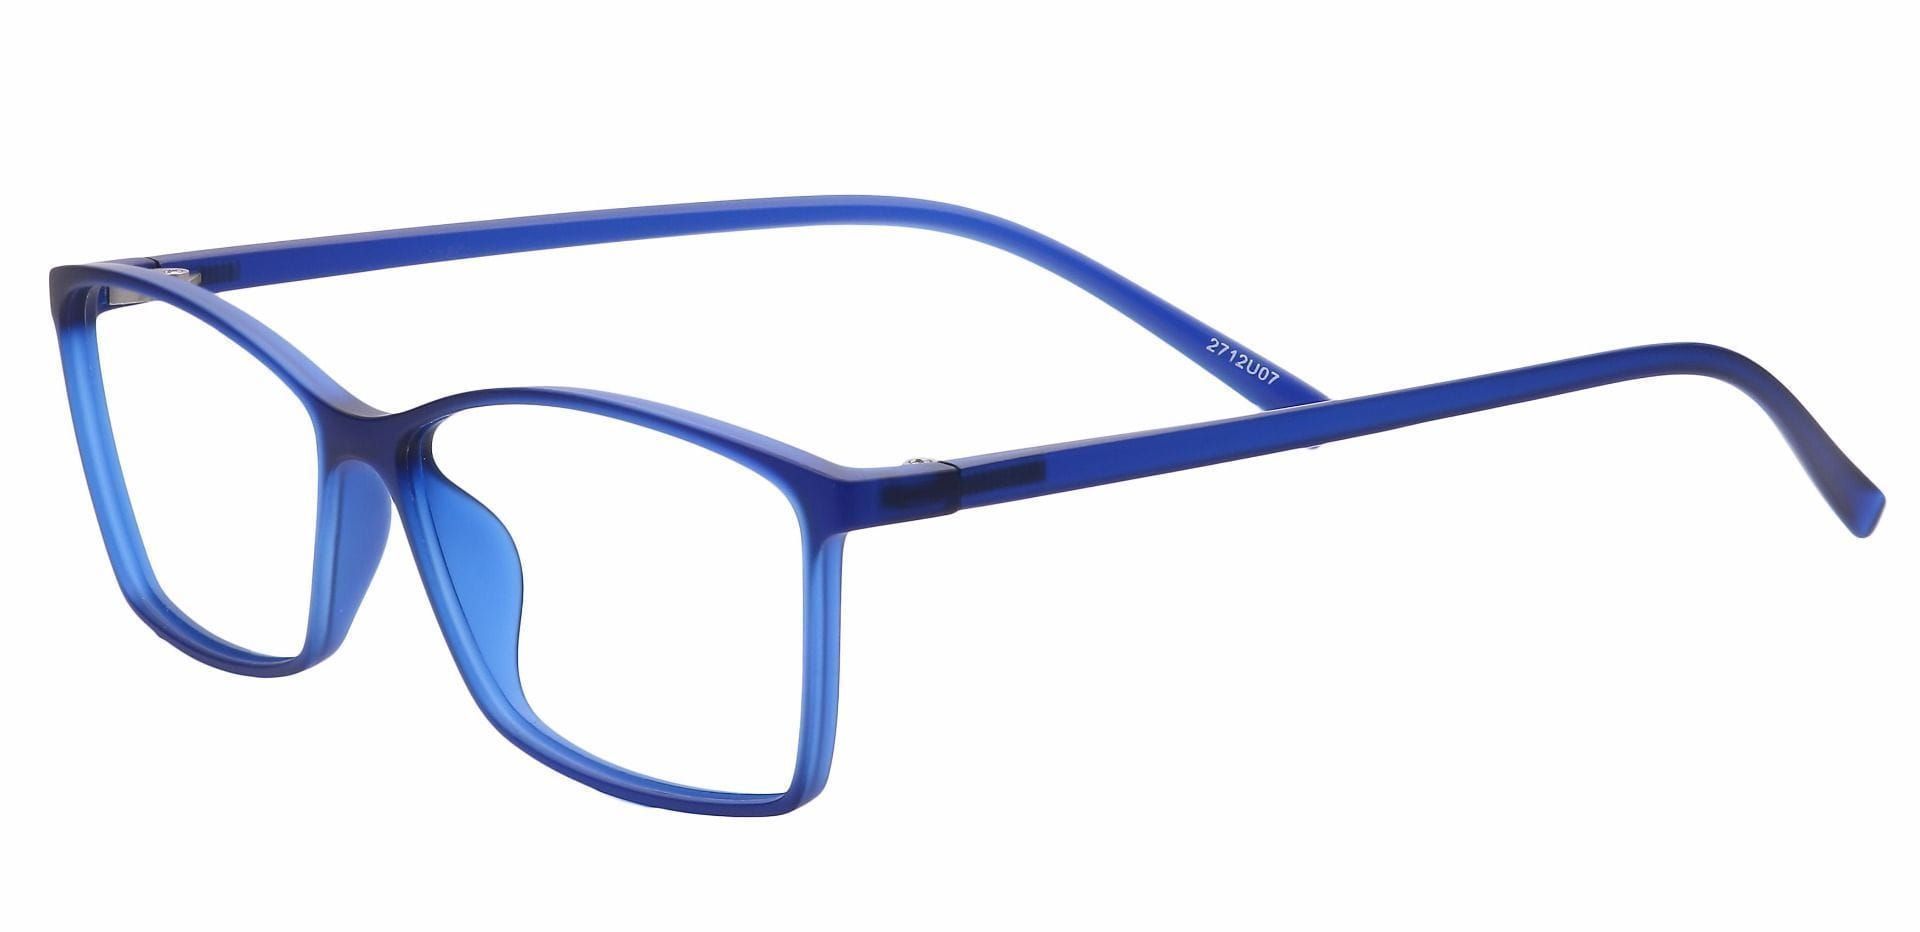 Align Rectangle Progressive Glasses - Blue